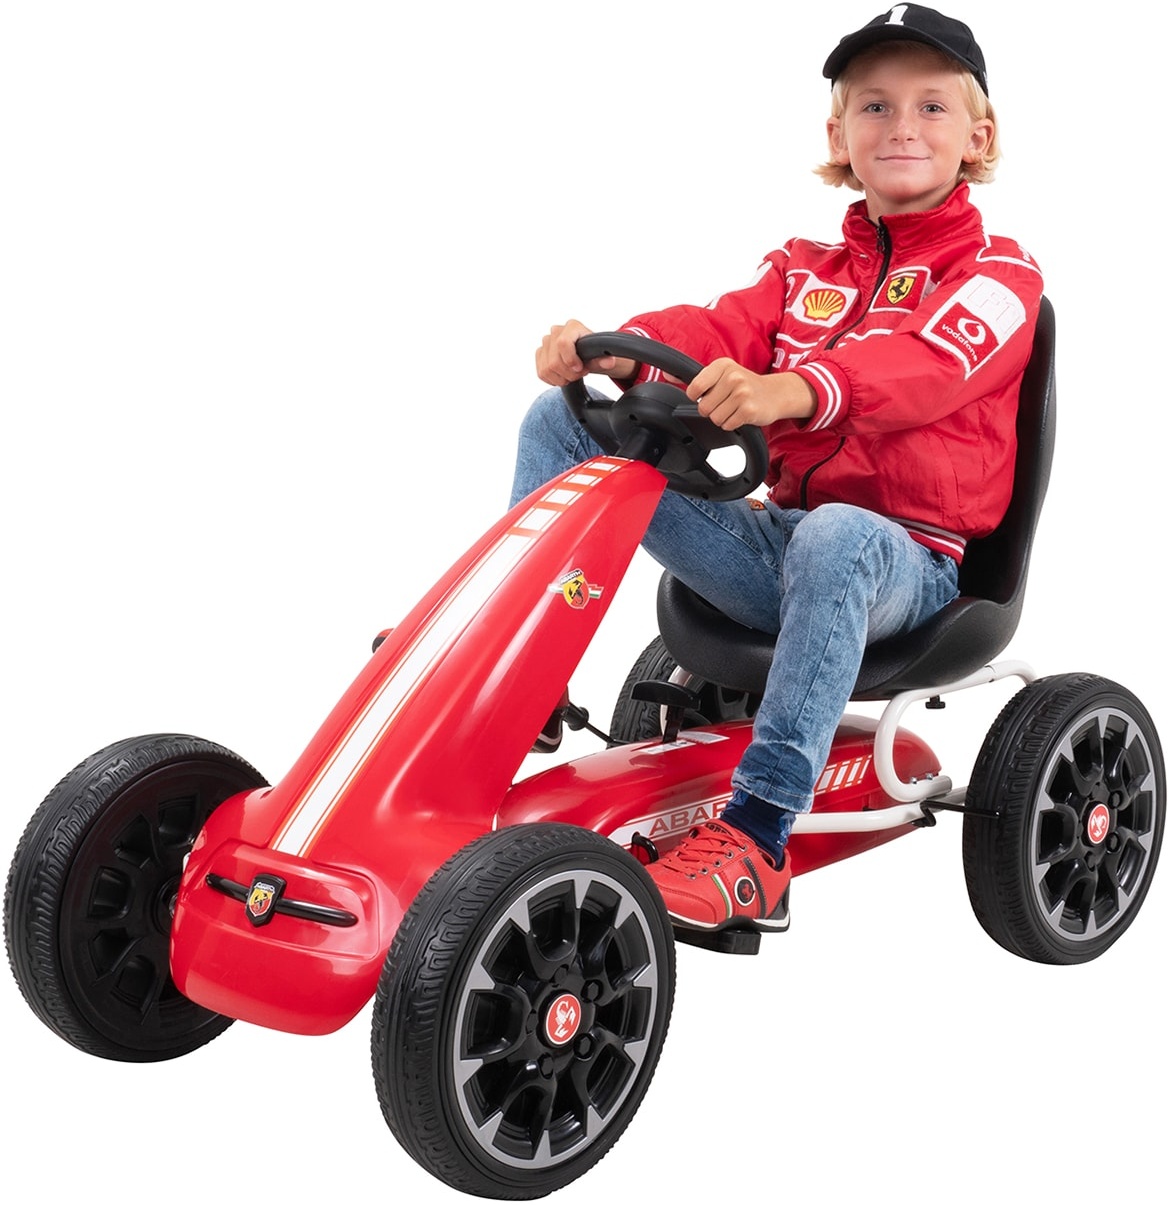 Kinder Pedal Go Kart Abarth FS595 Lizenziert (Rot)